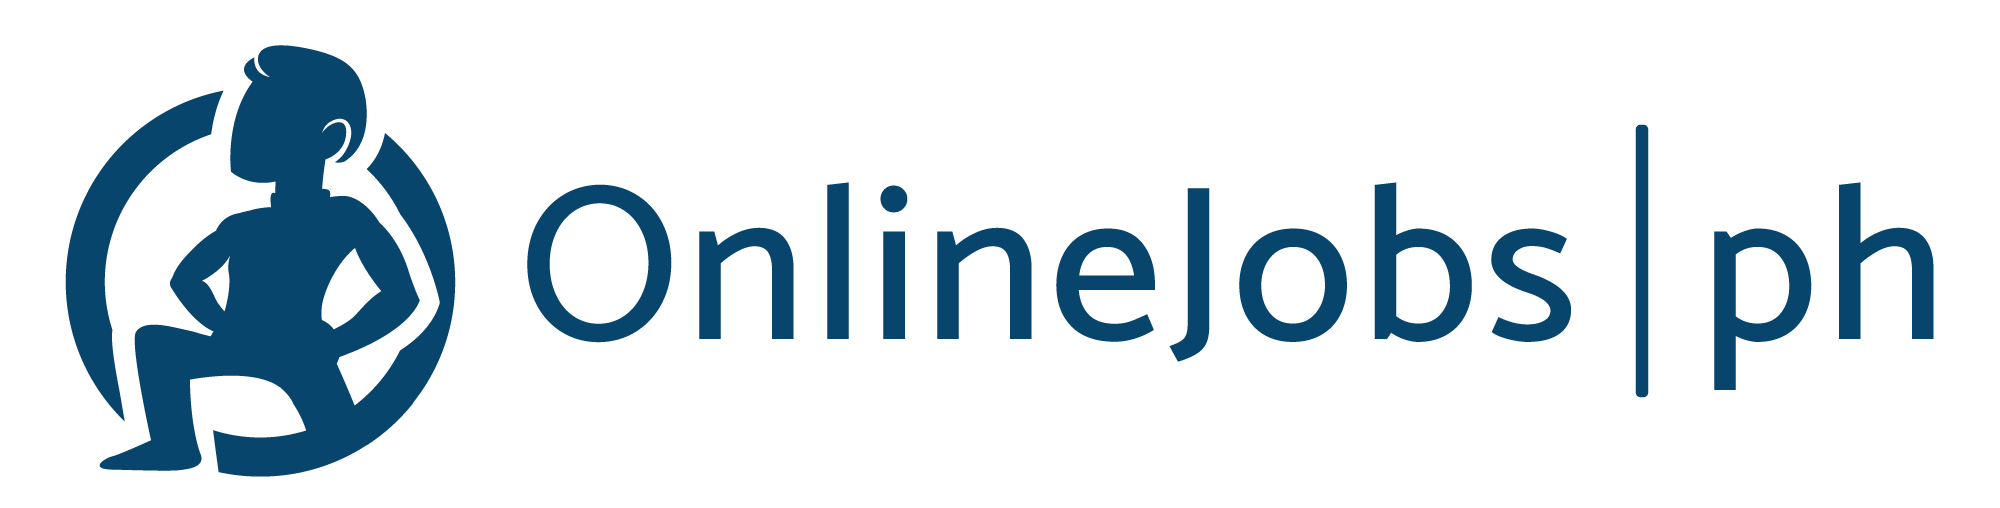 Online Jobs Logo